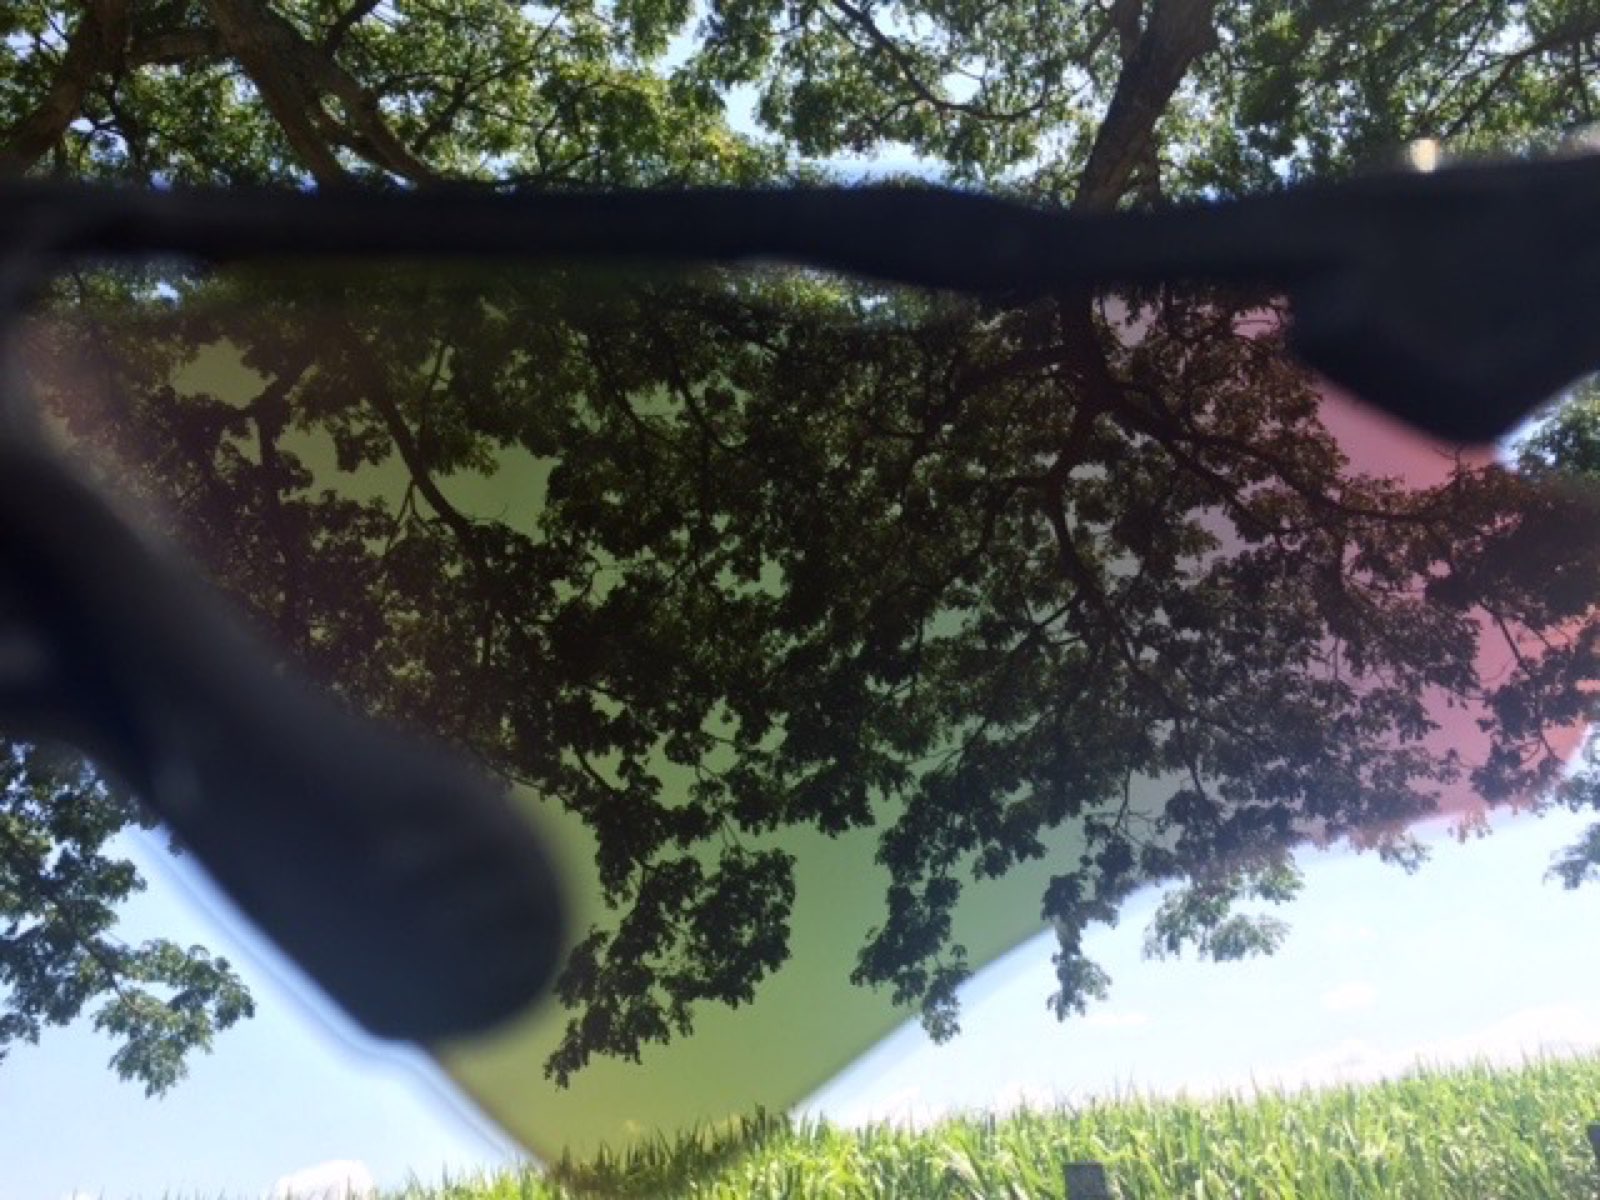 Through the glasses